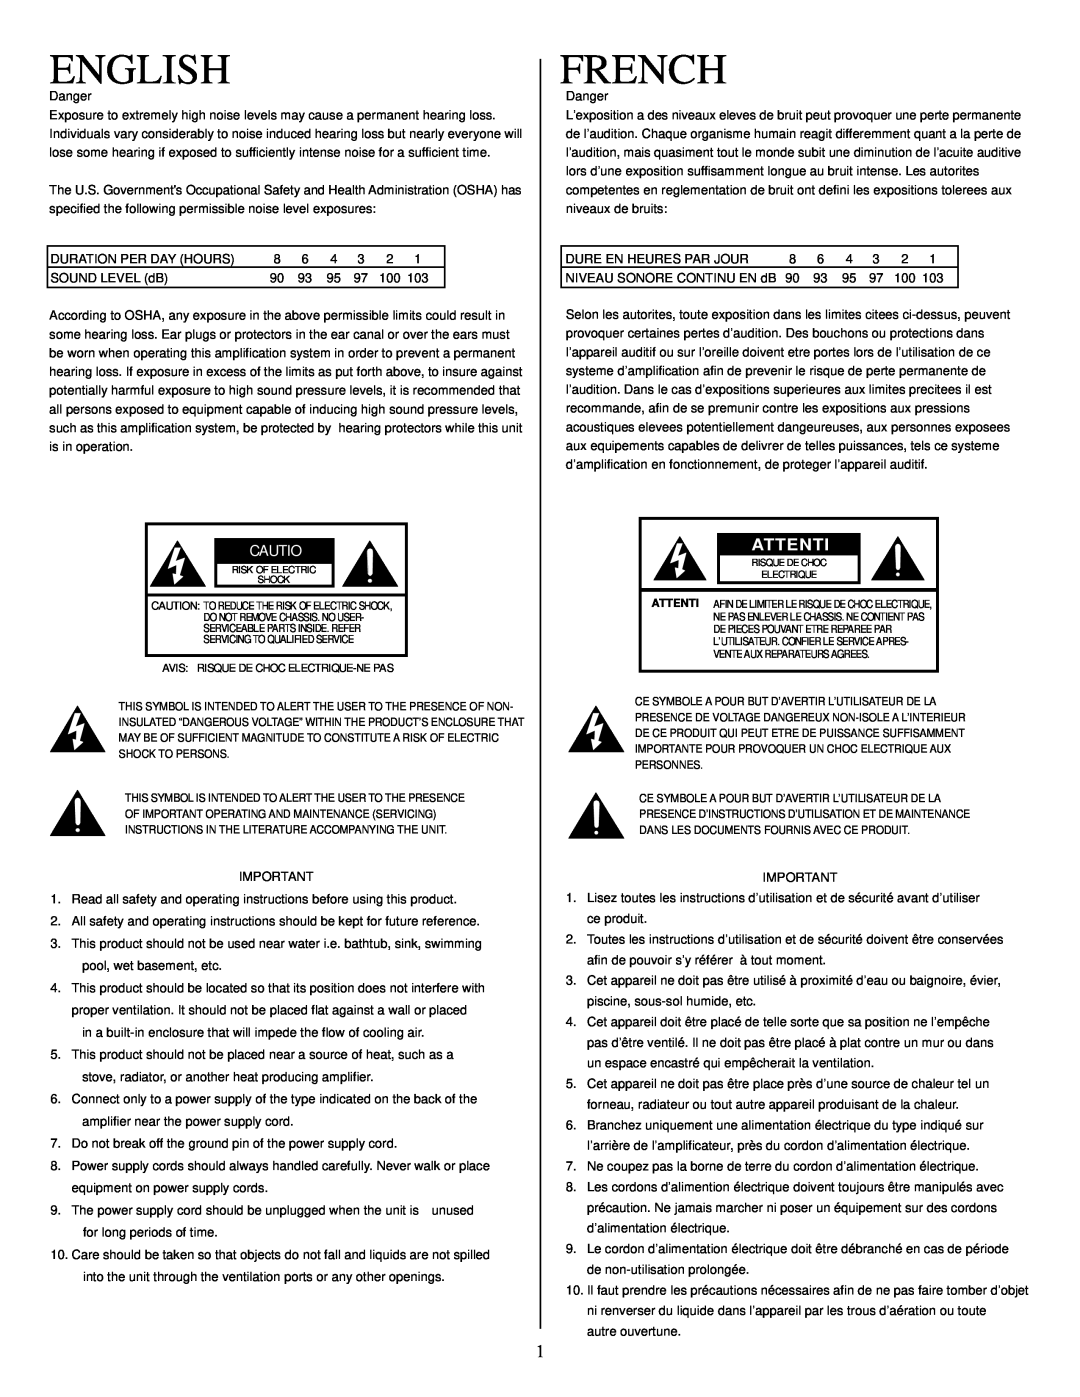 Kustom KPM7200 manual English, French, Cautio, Attenti 